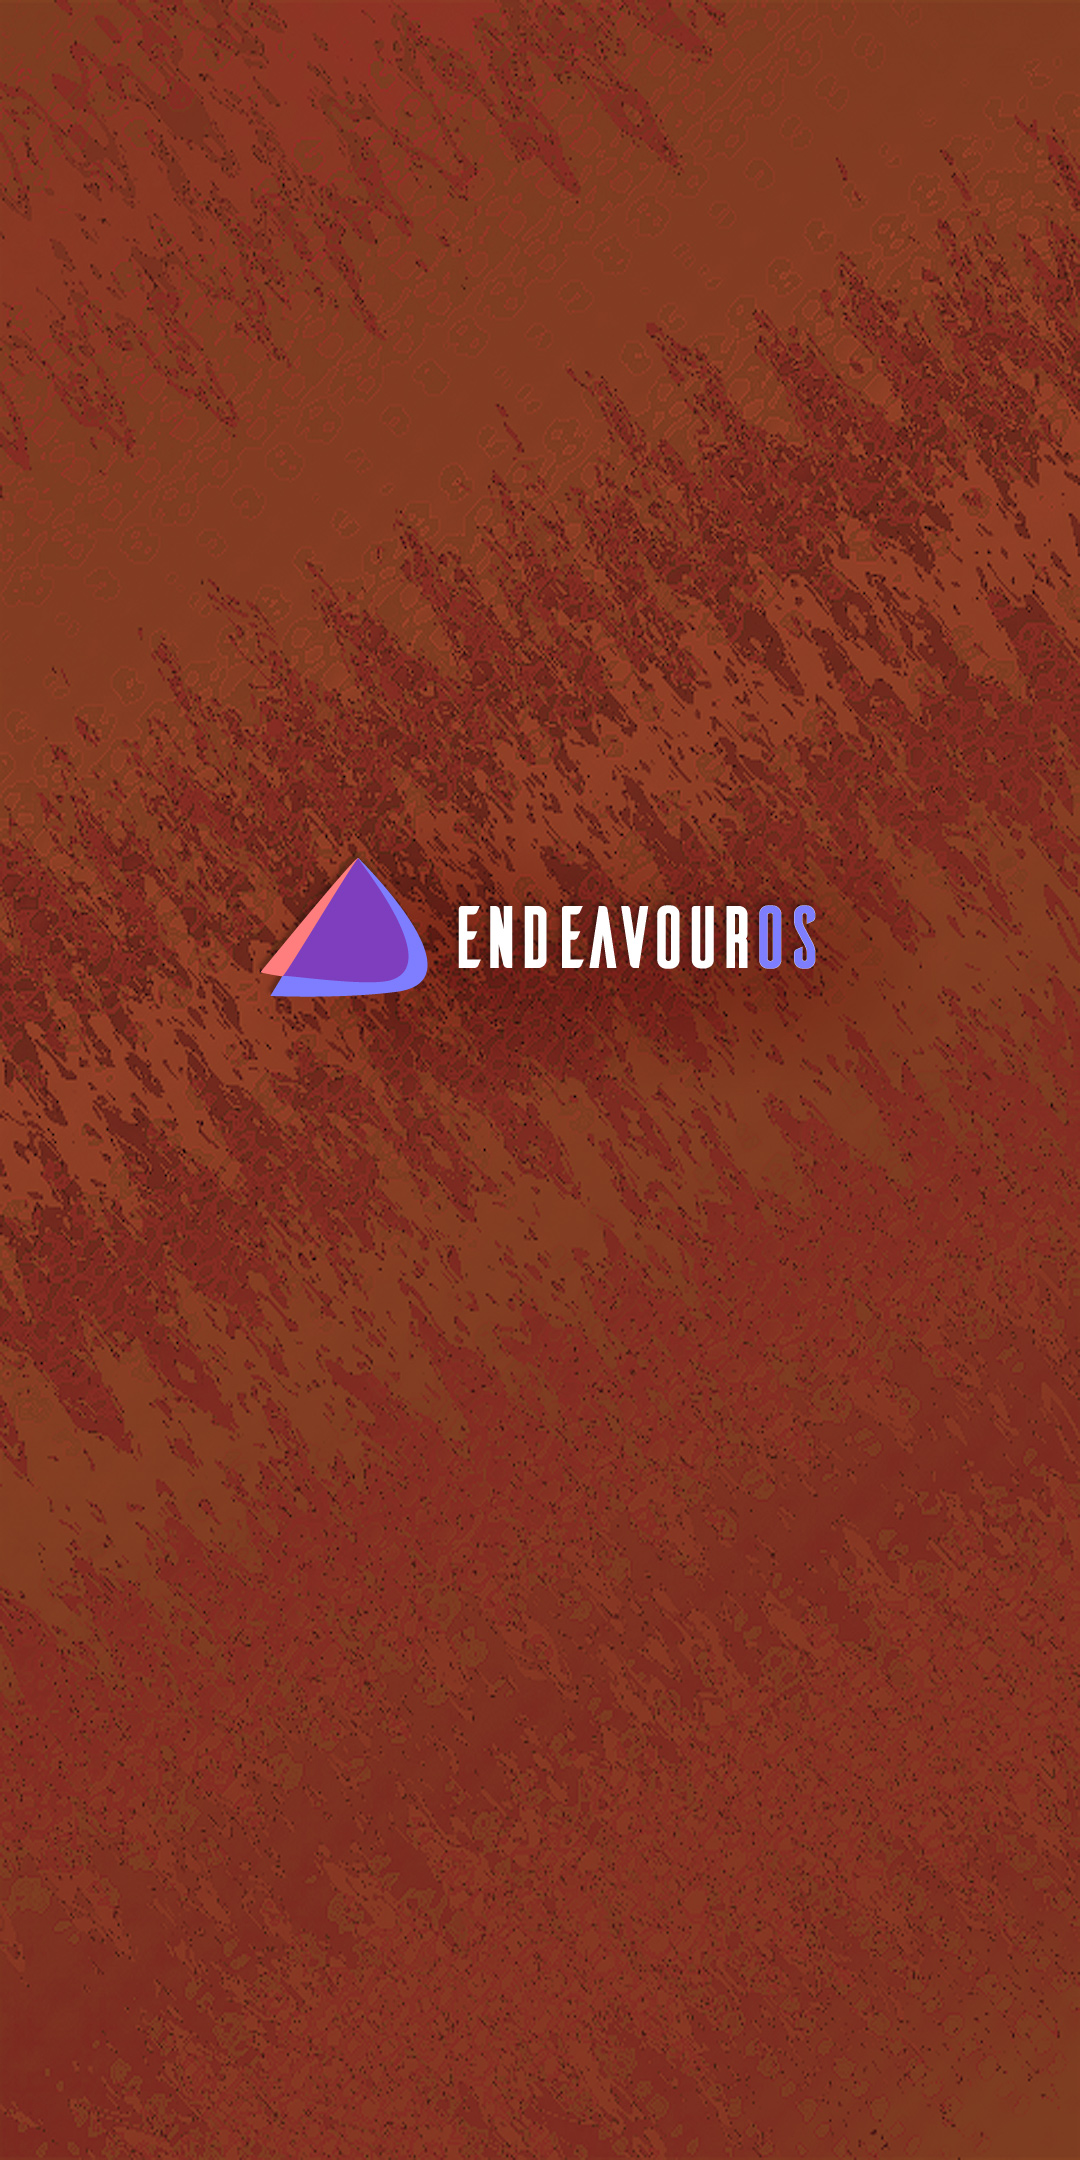 06_Endeavour_mob_bg